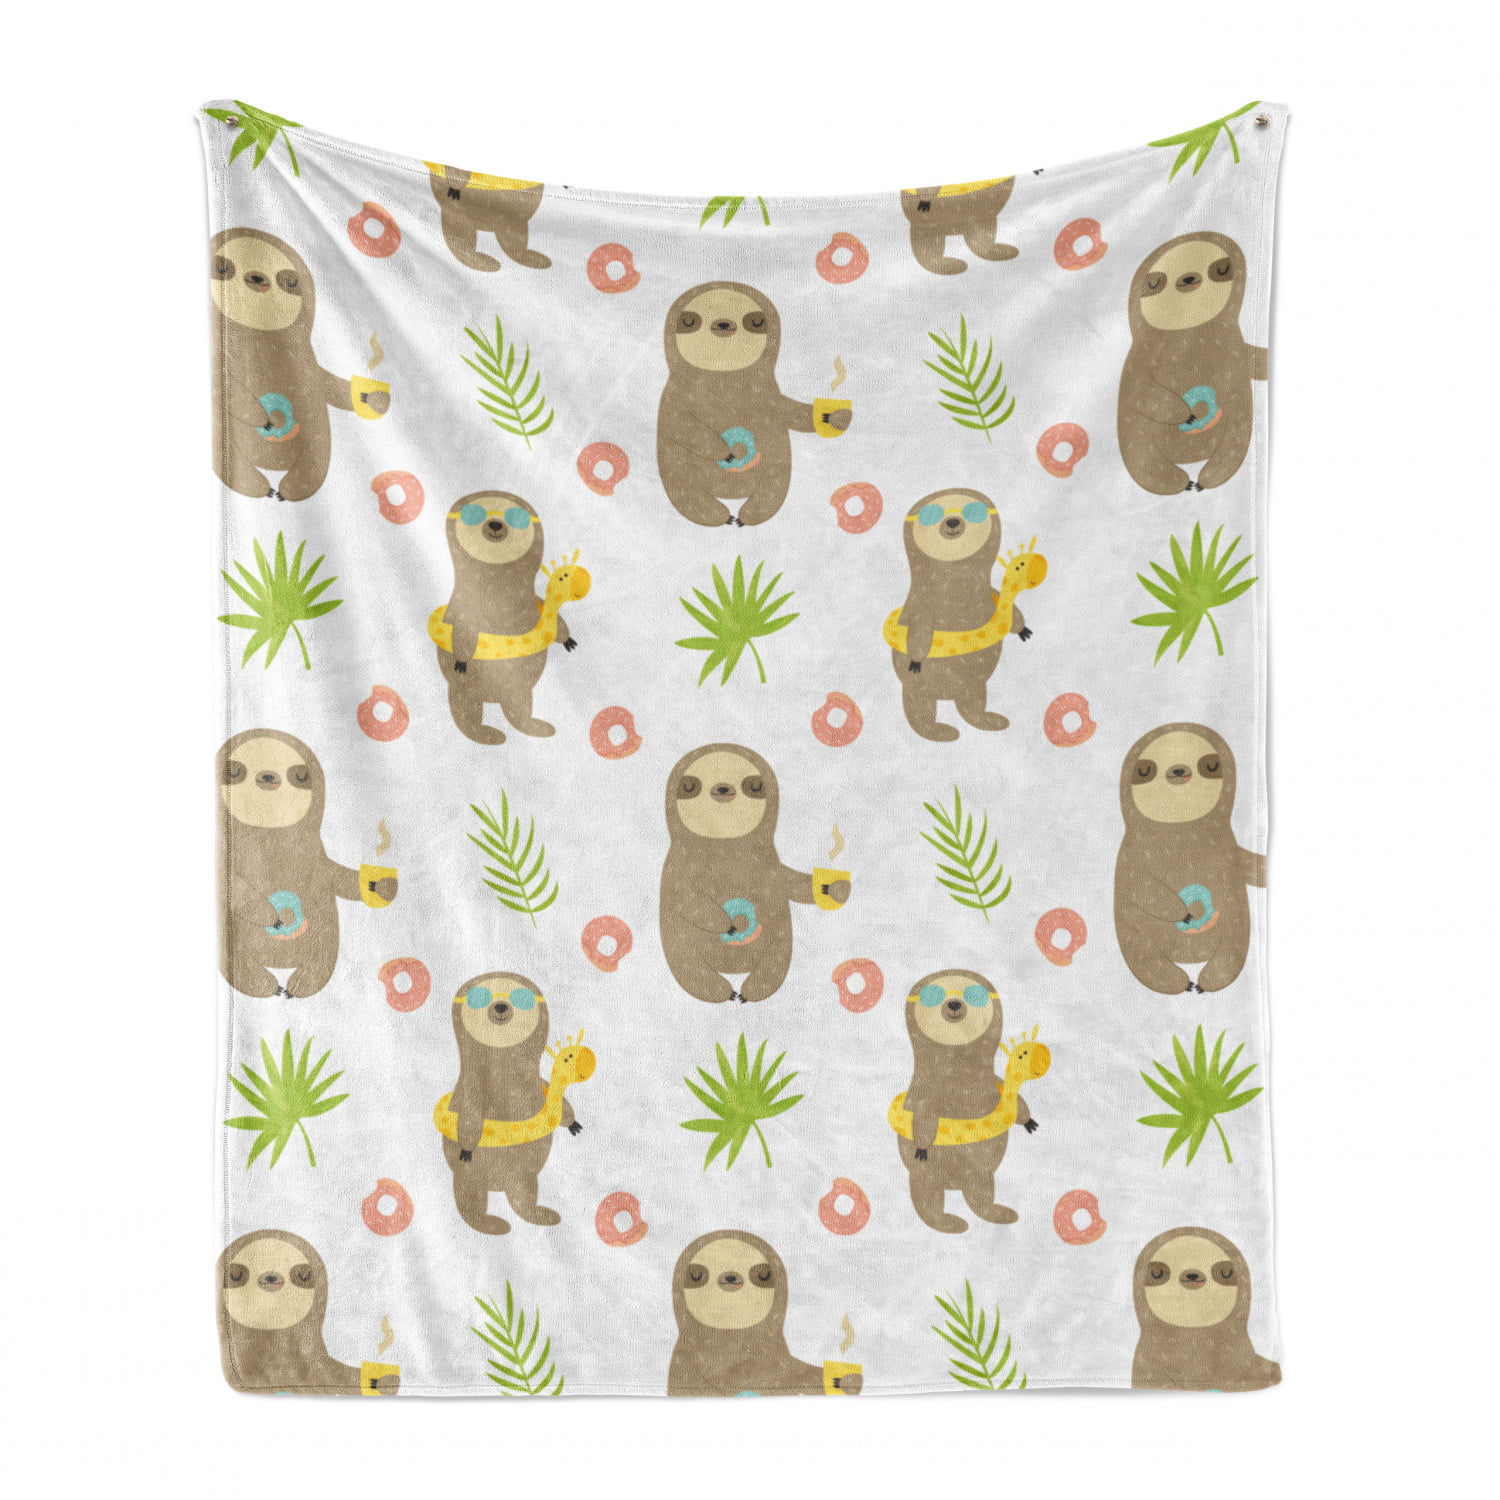 Cute Christmas sloth plush throw blanket Oversizeed 50"x60" 